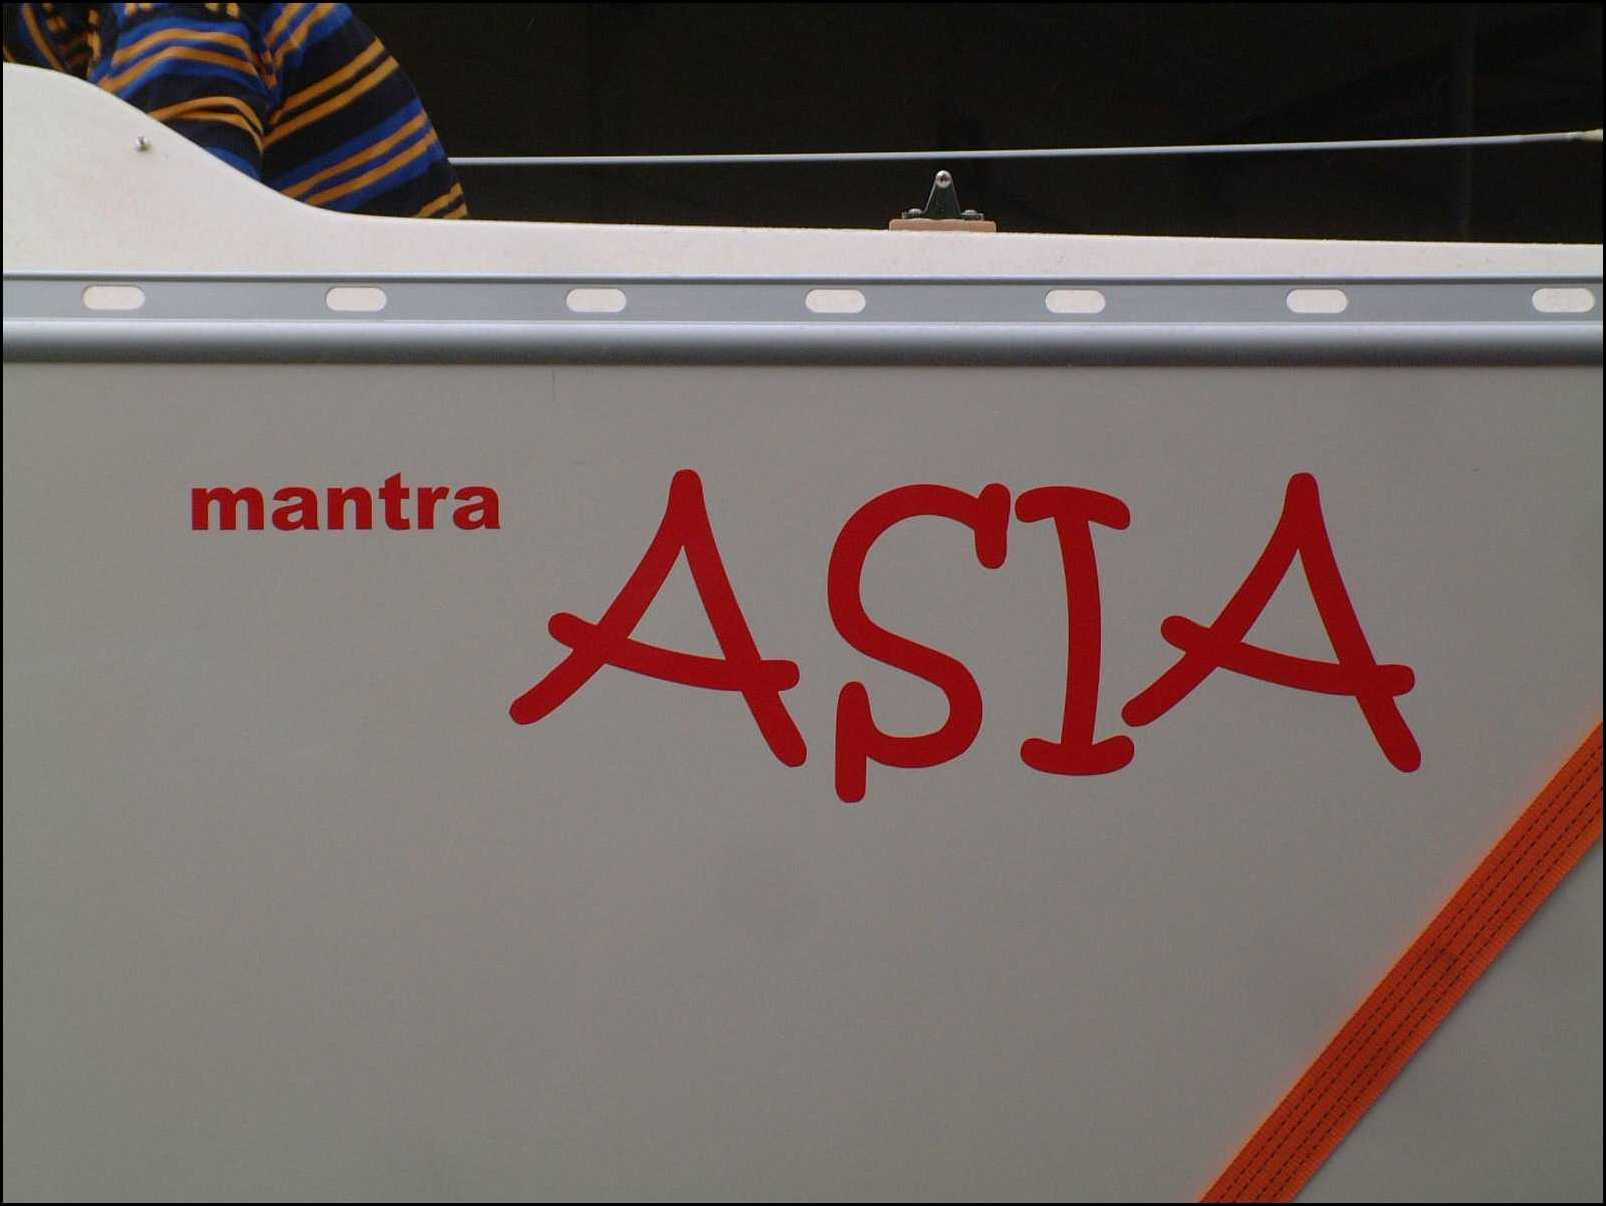 Mantra Asia